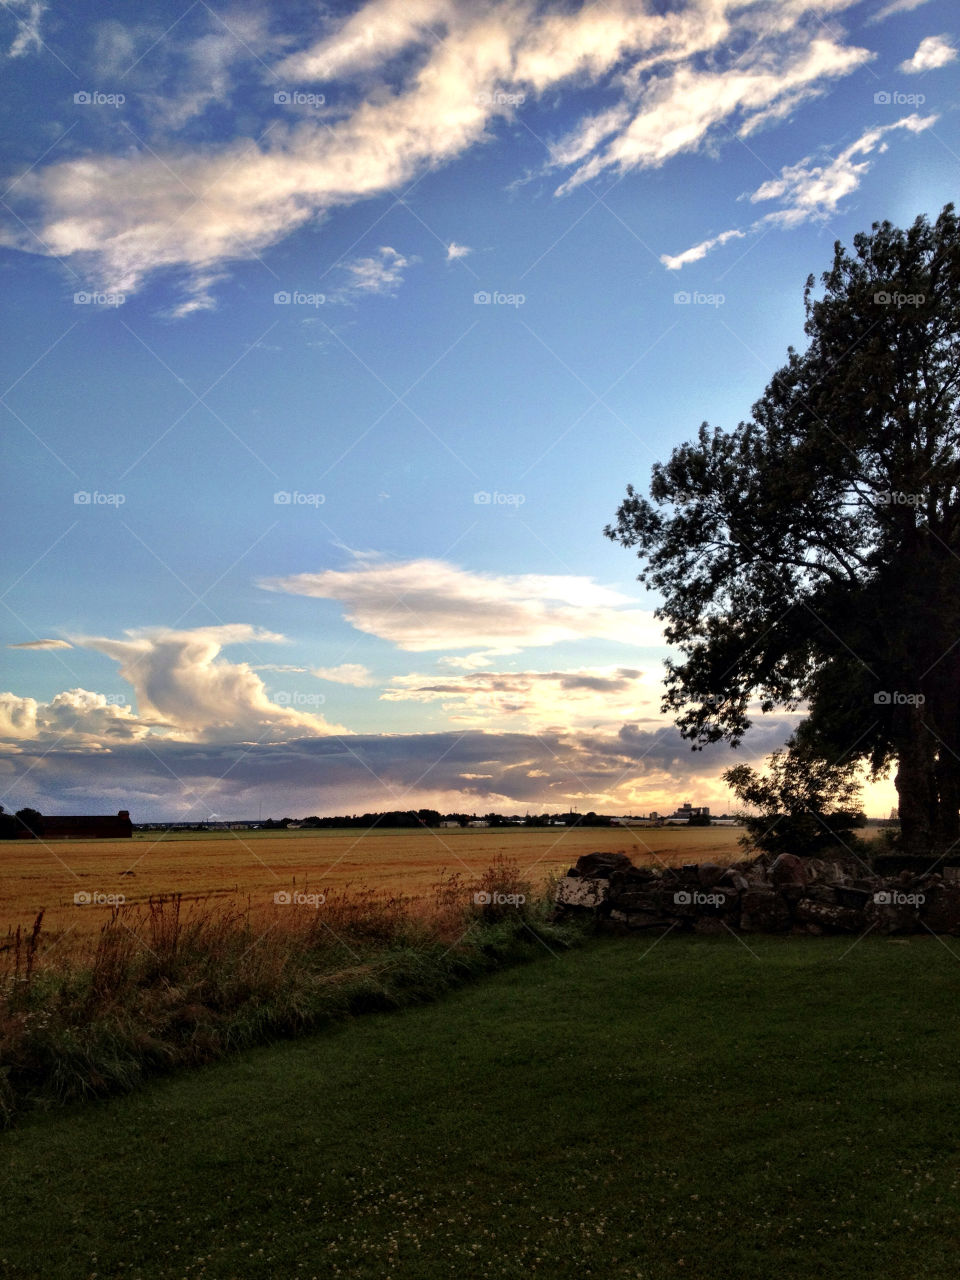 vara sweden field garden country by morwell